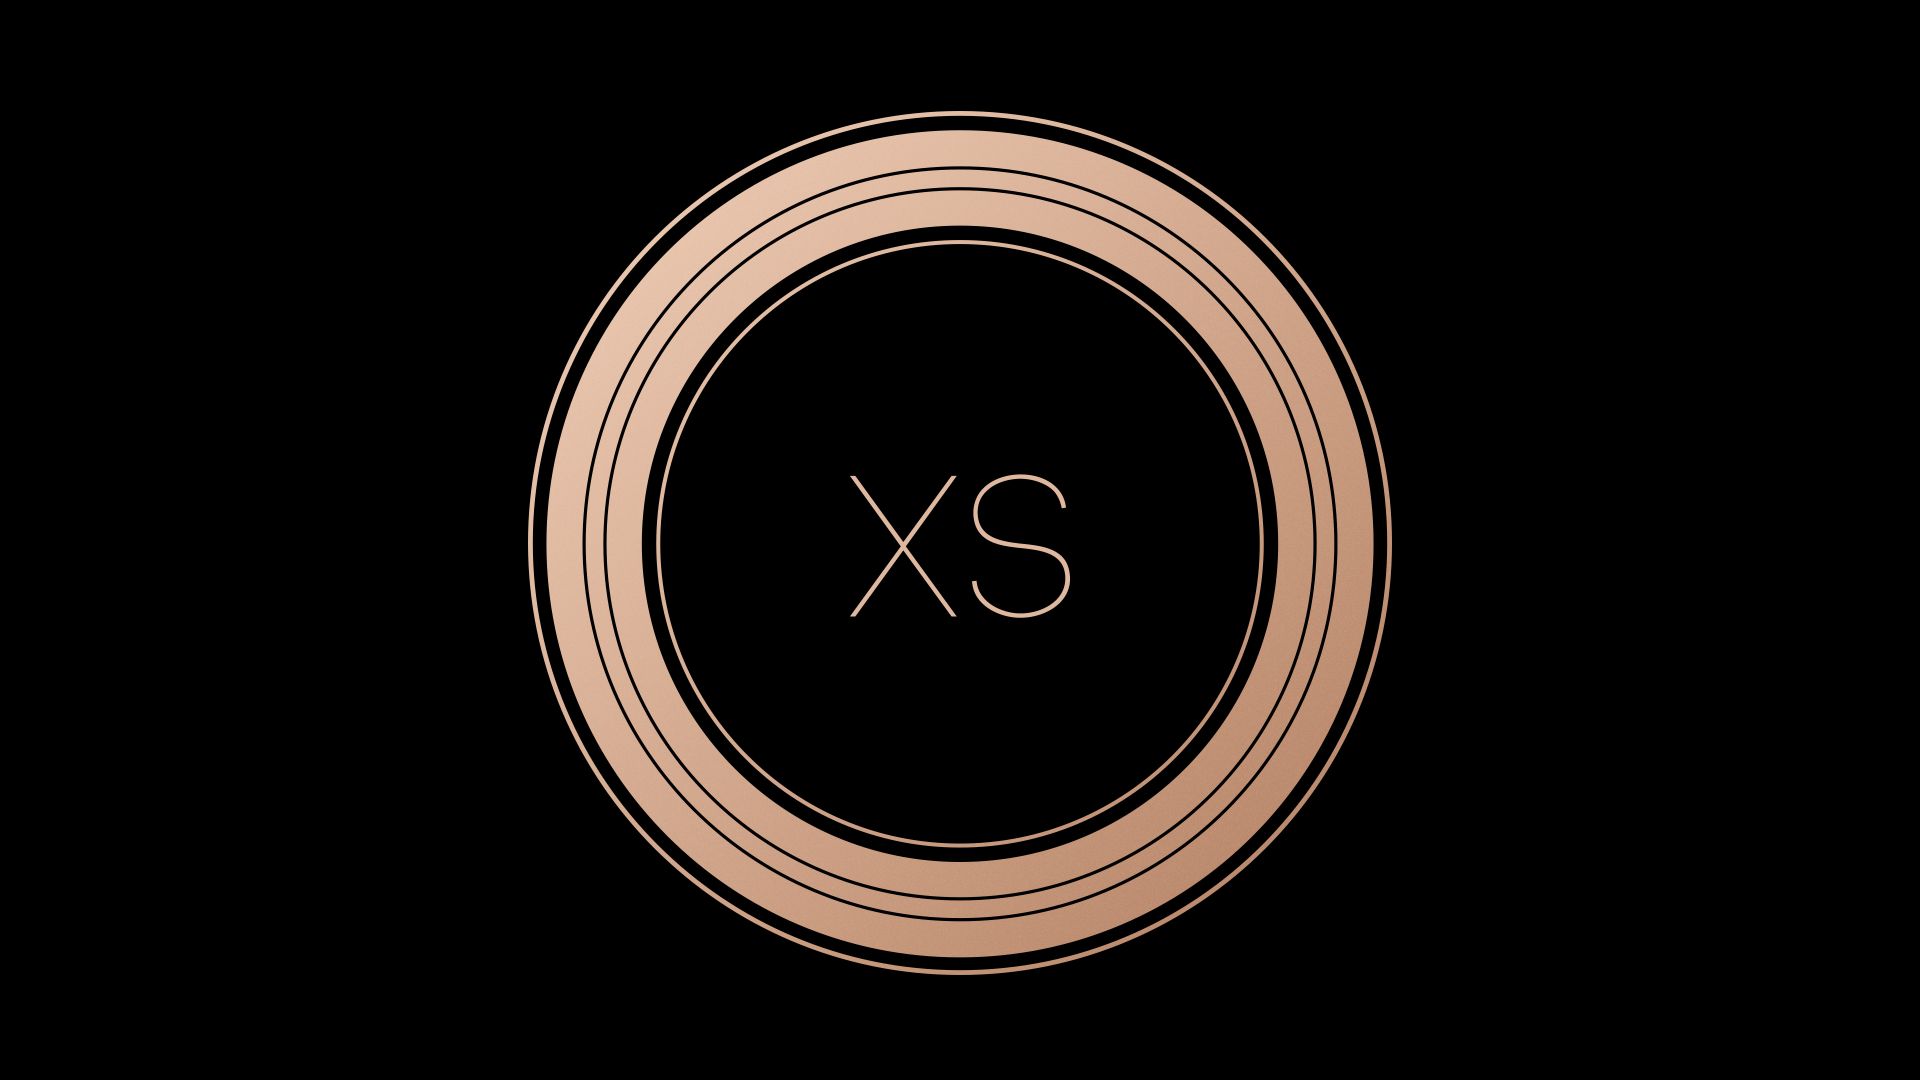 iPhone XS, 4K (horizontal)